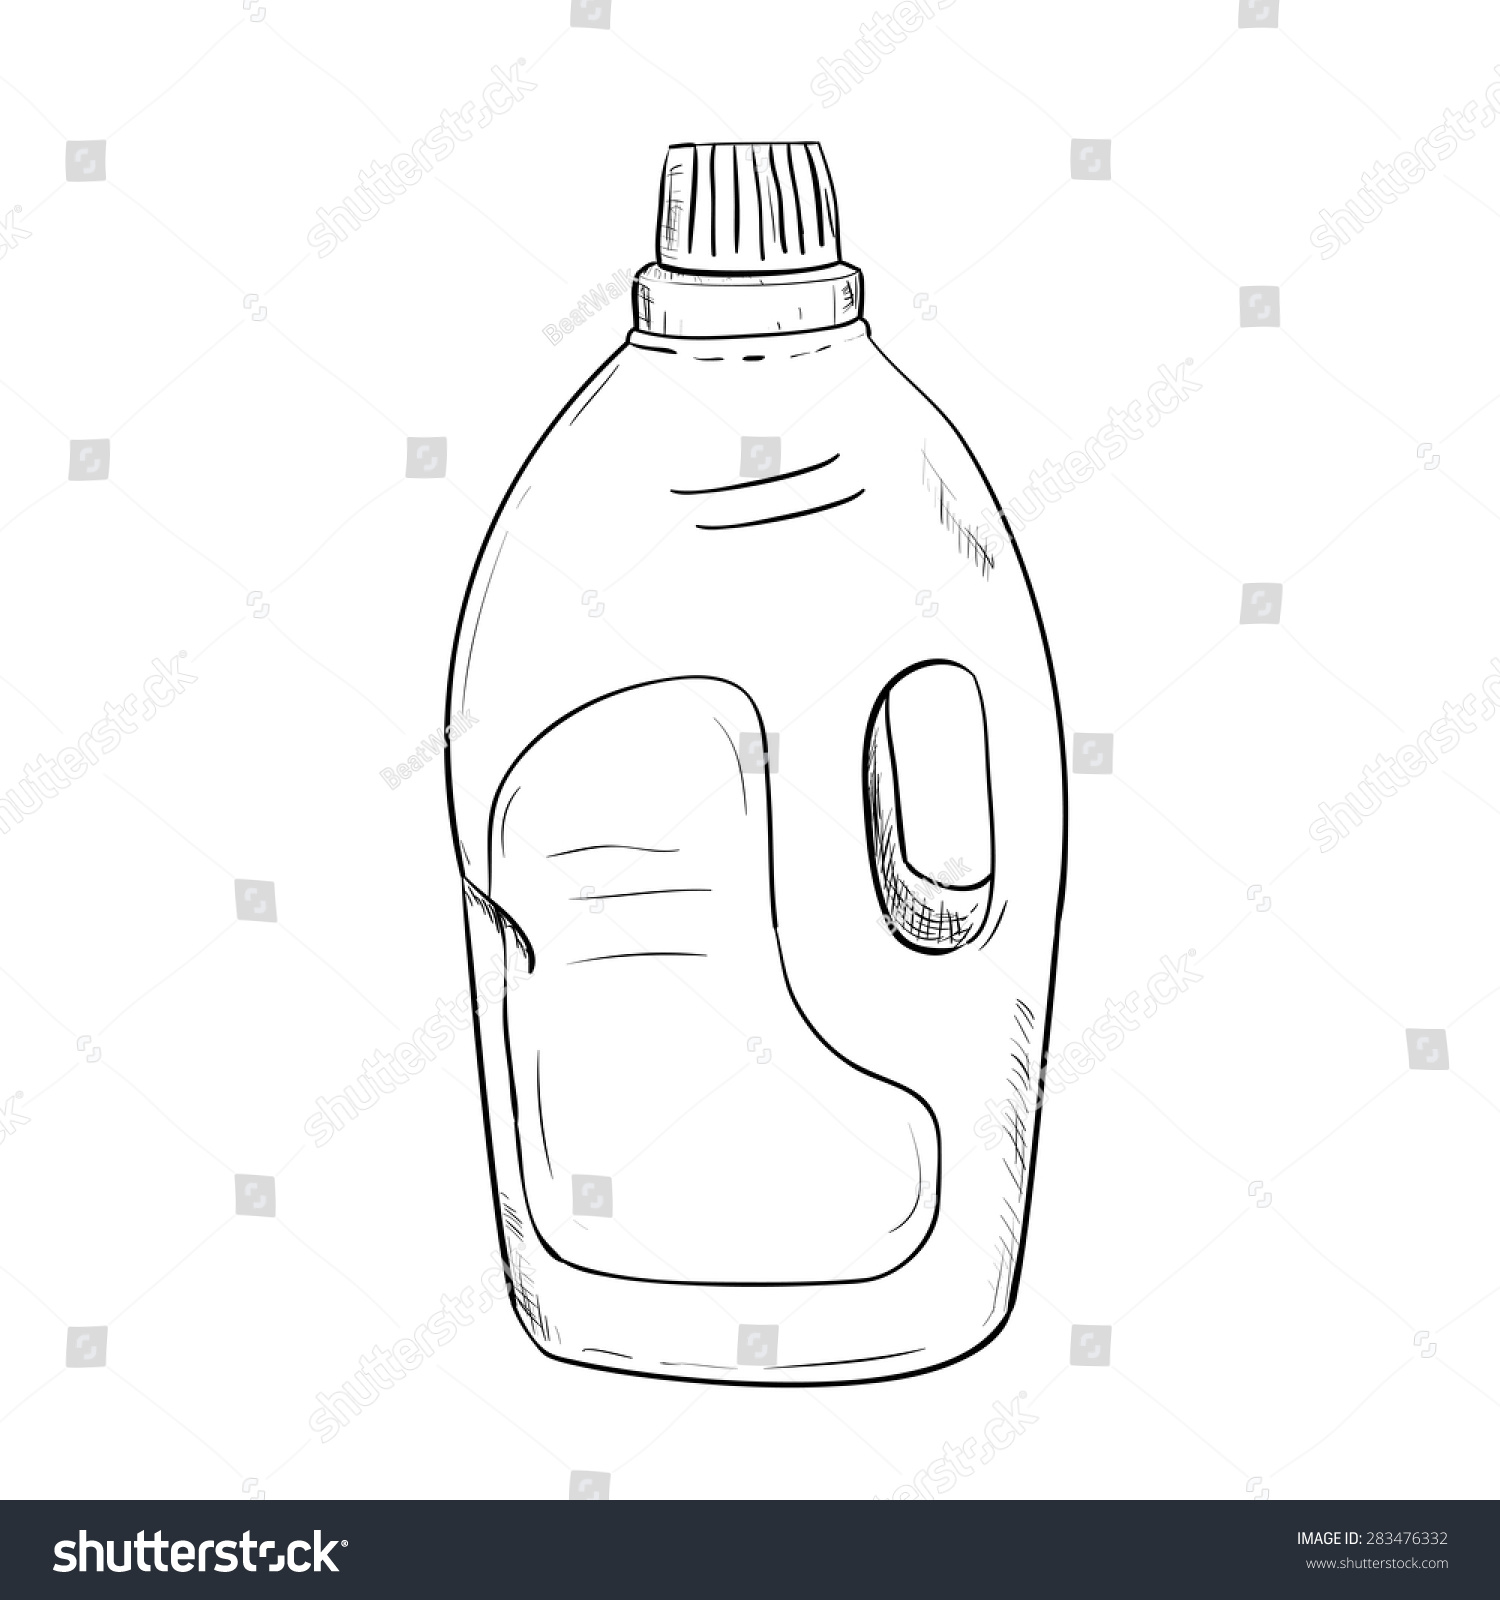 Vector Sketch Of Bottle. Hand Draw Illustration. - 283476332 : Shutterstock